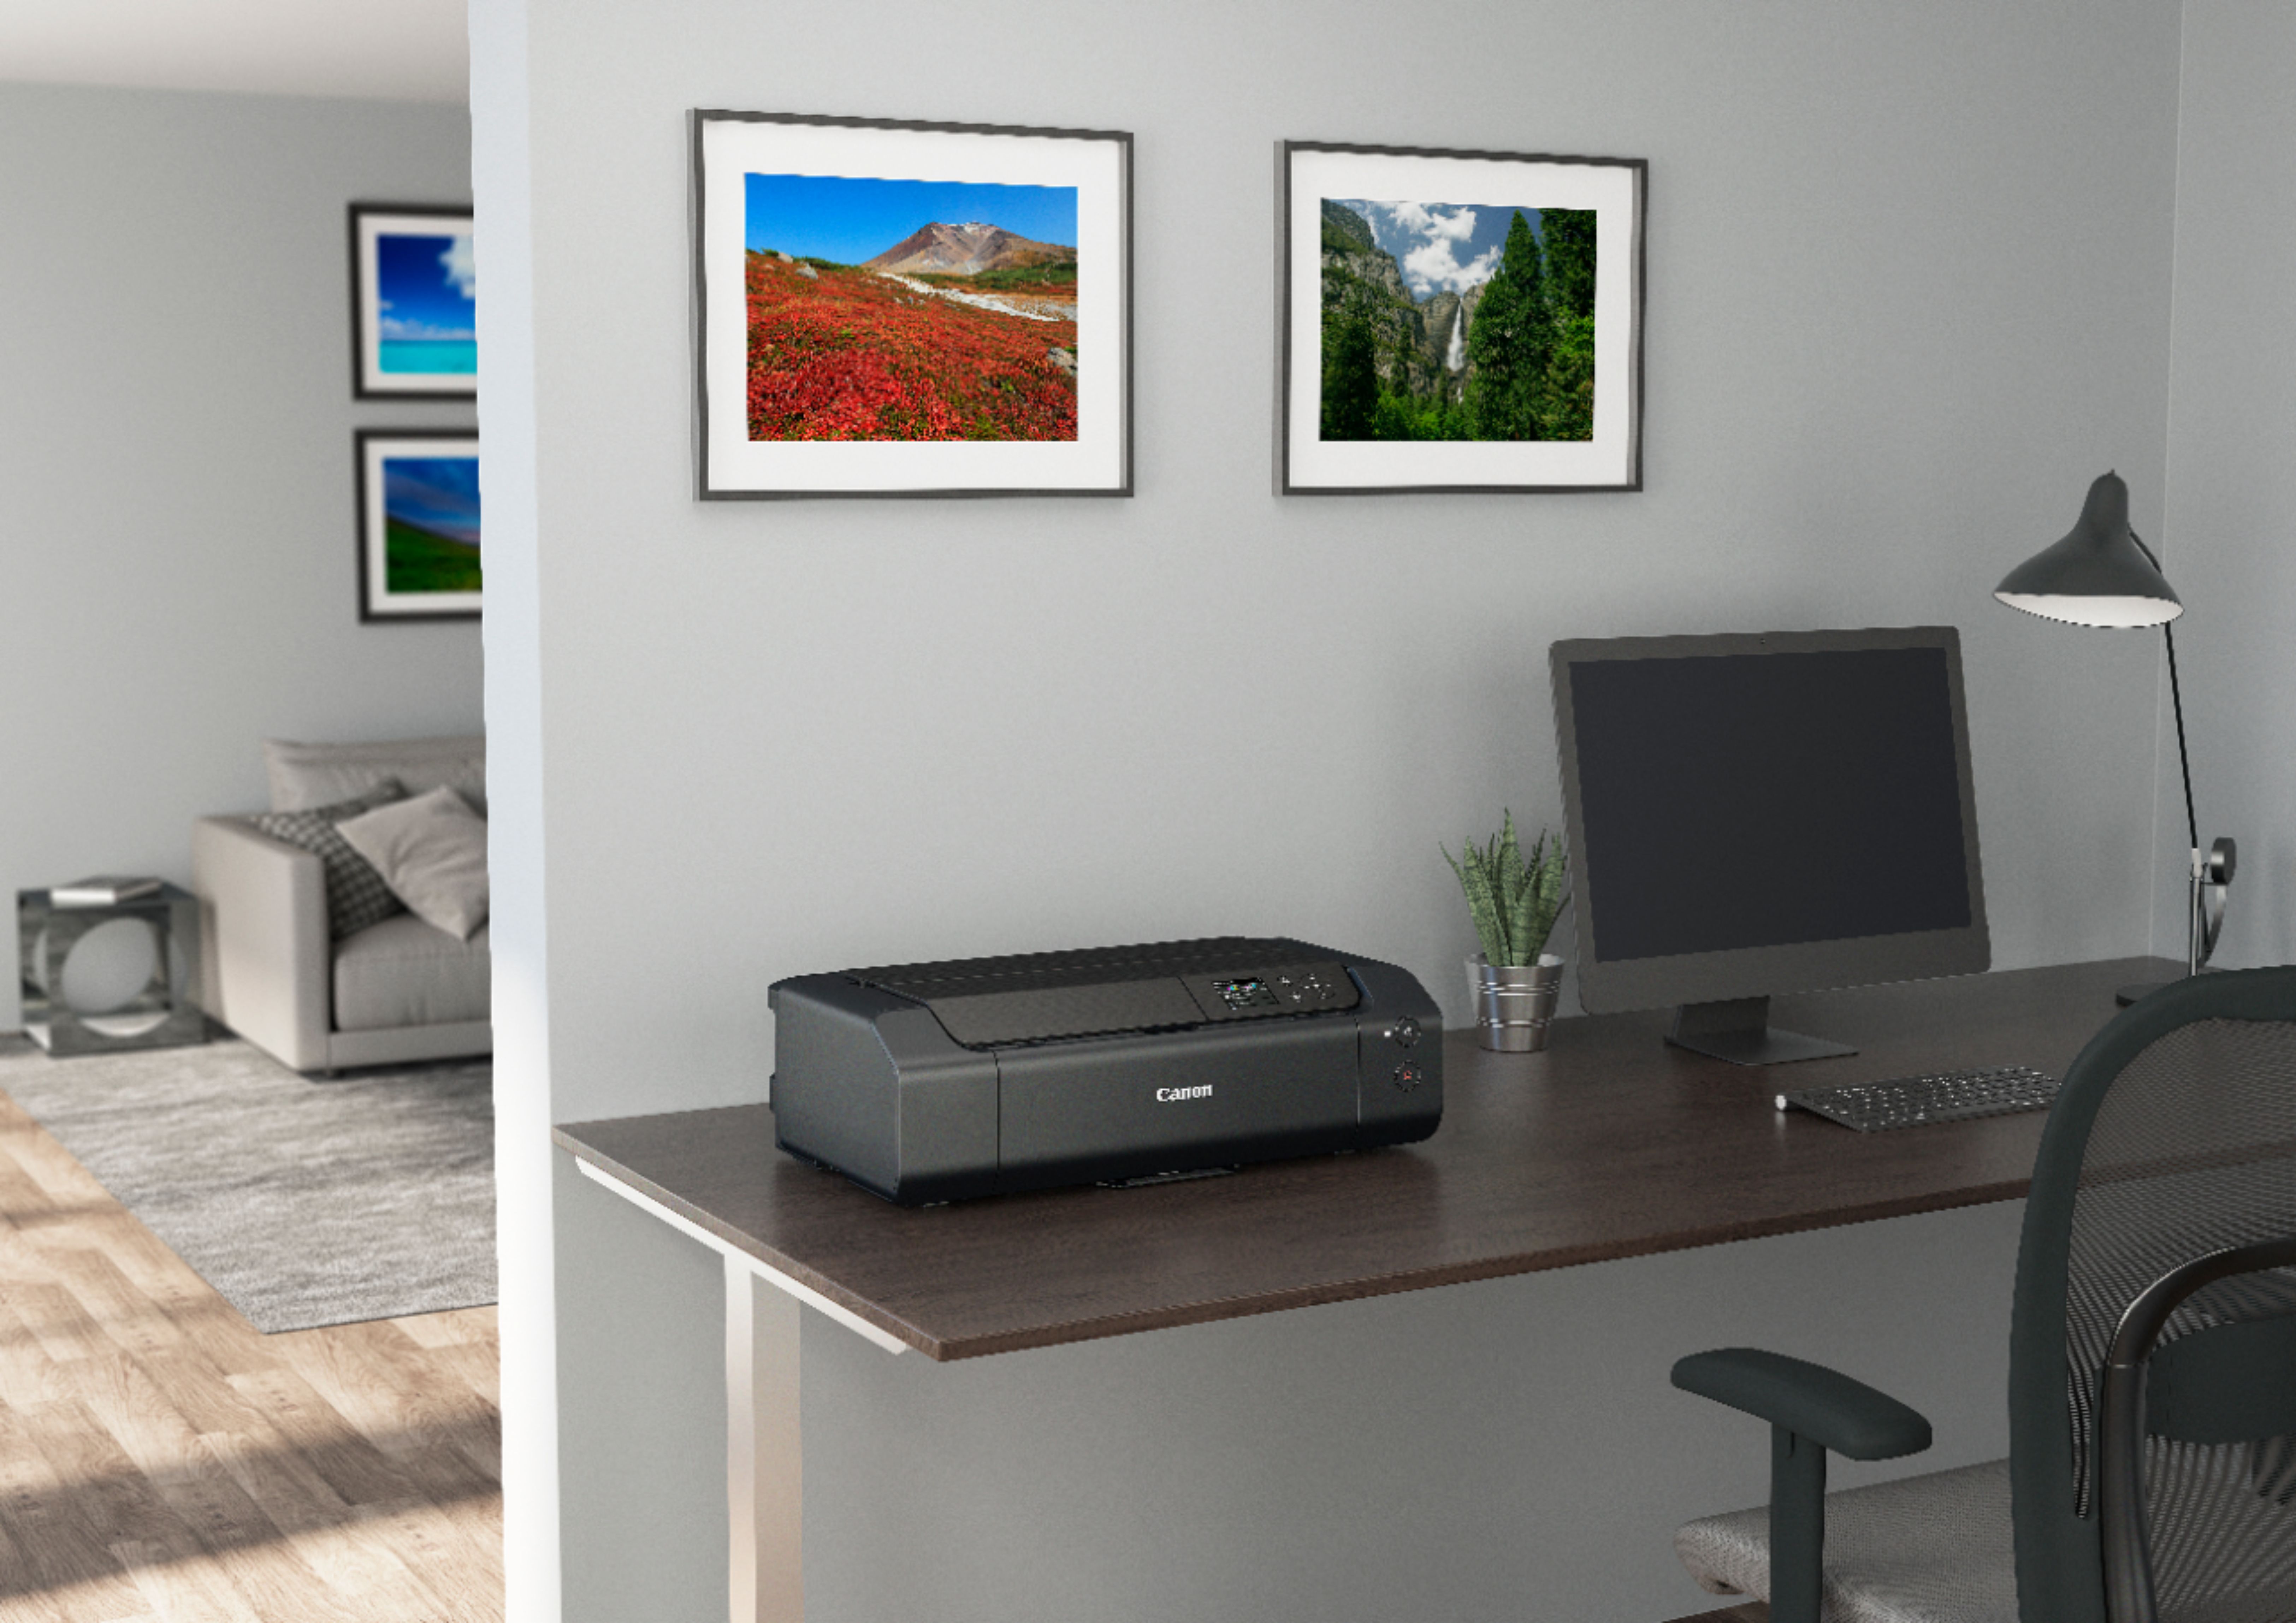 Canon PIXMA Pro 200 Professional 13 Wireless Inkjet Photo Printer